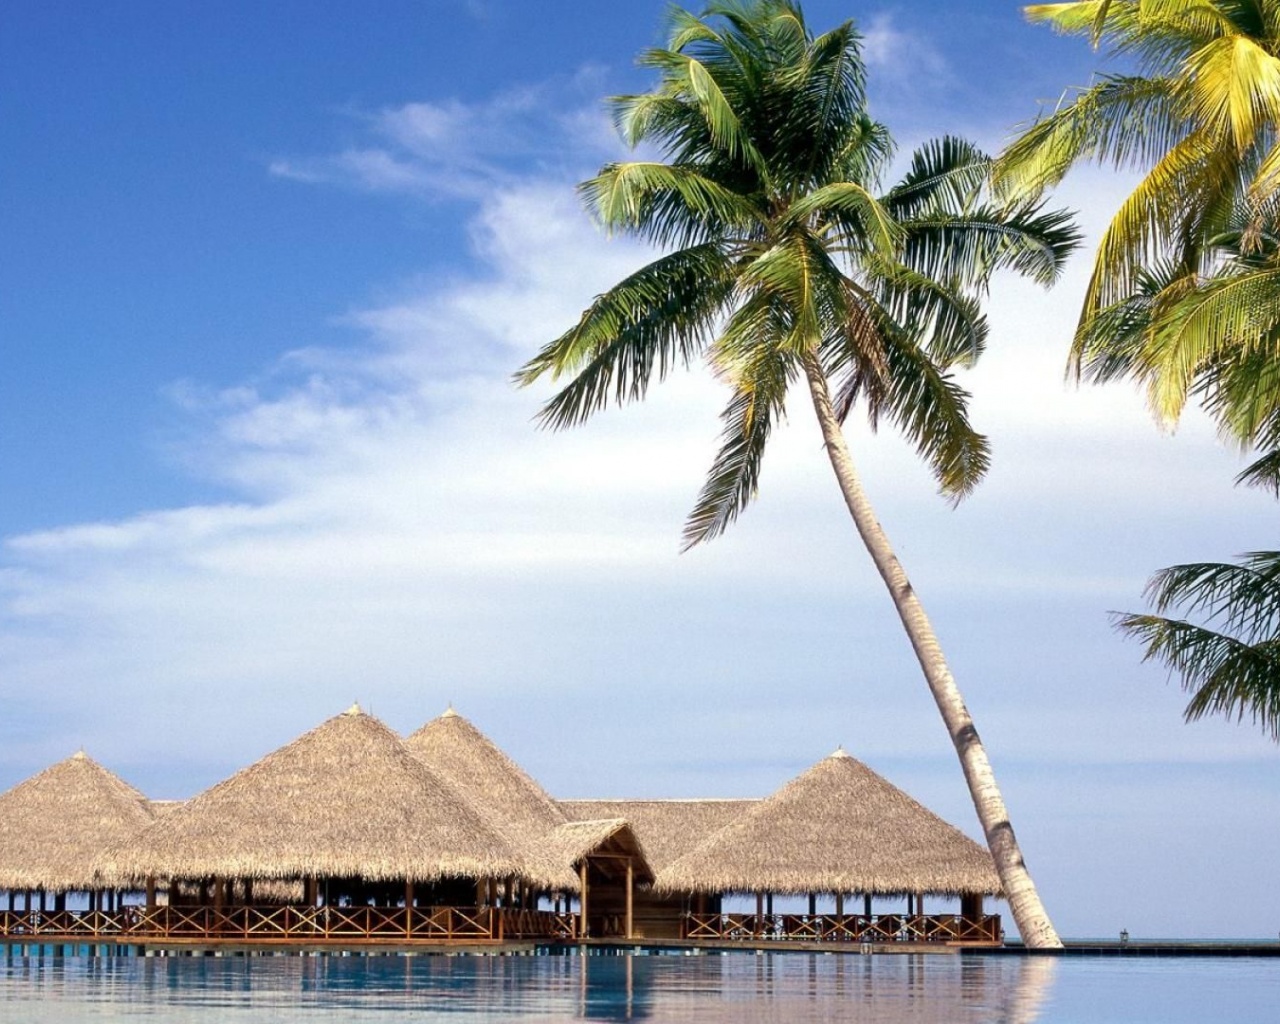 Maldives Entertainment Center Beach Resort Geography Asia Travel Nature